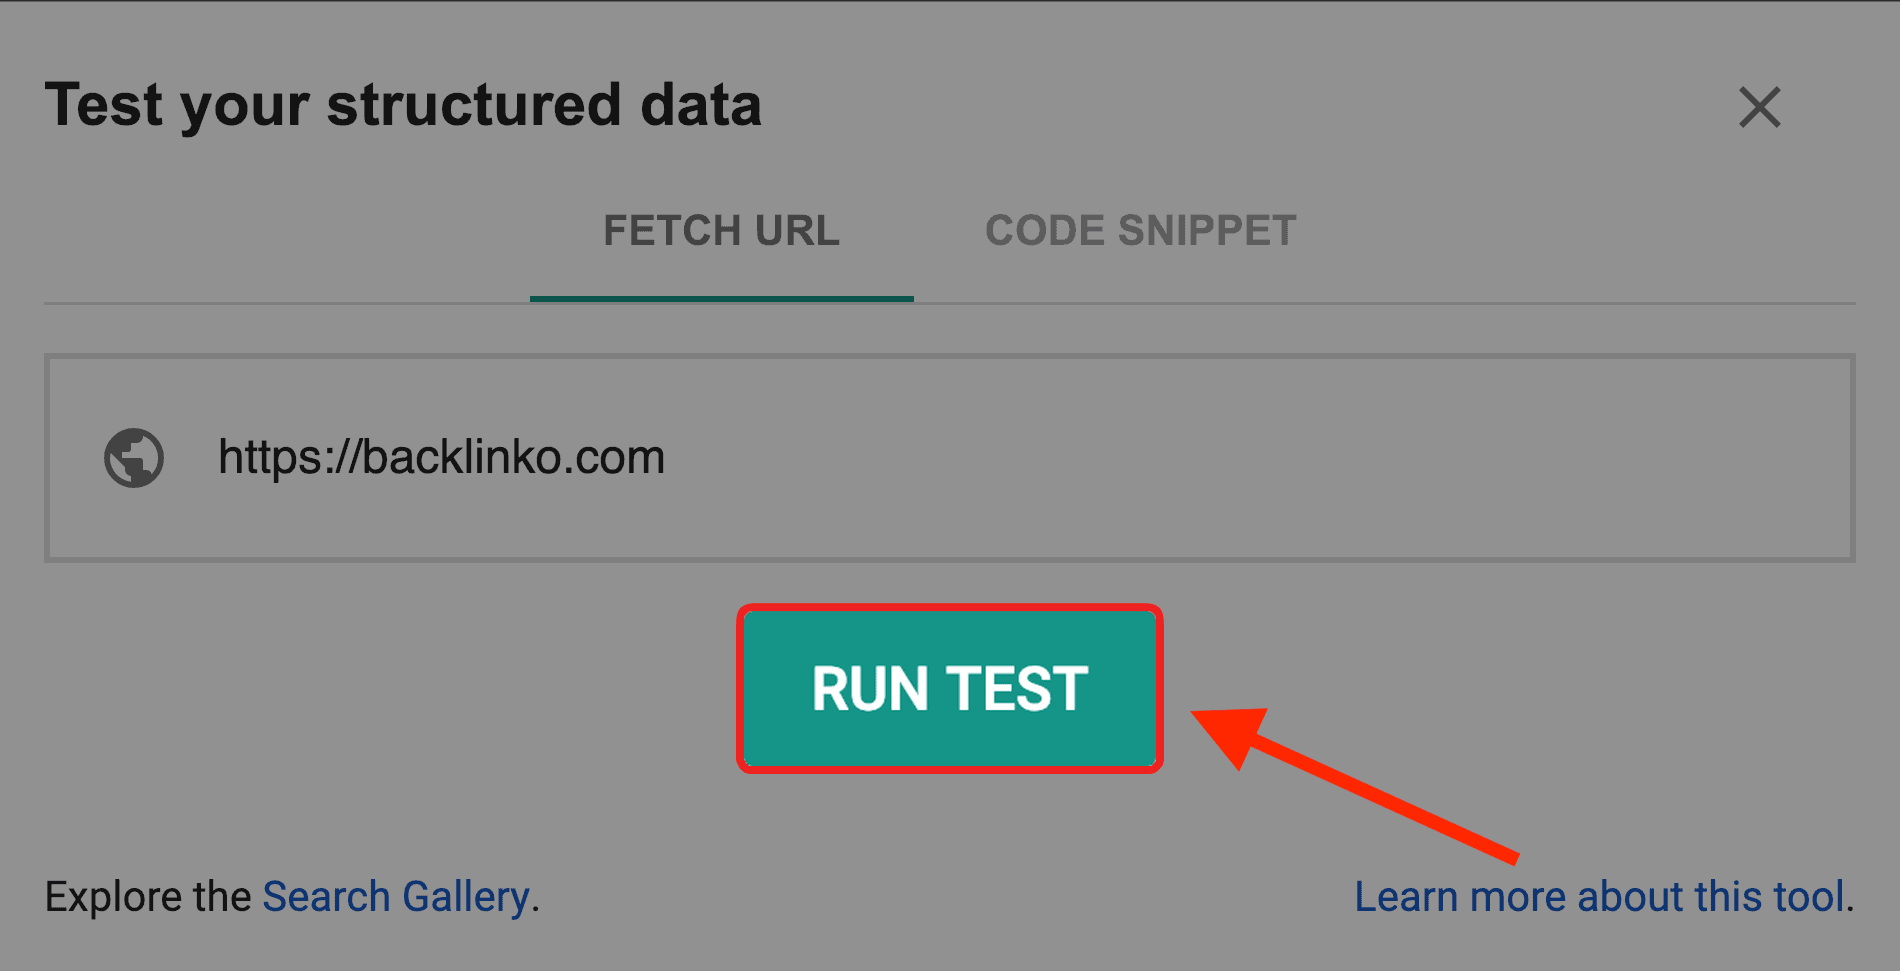 Google Structured Data Testing Tool – Hit "Run Test"